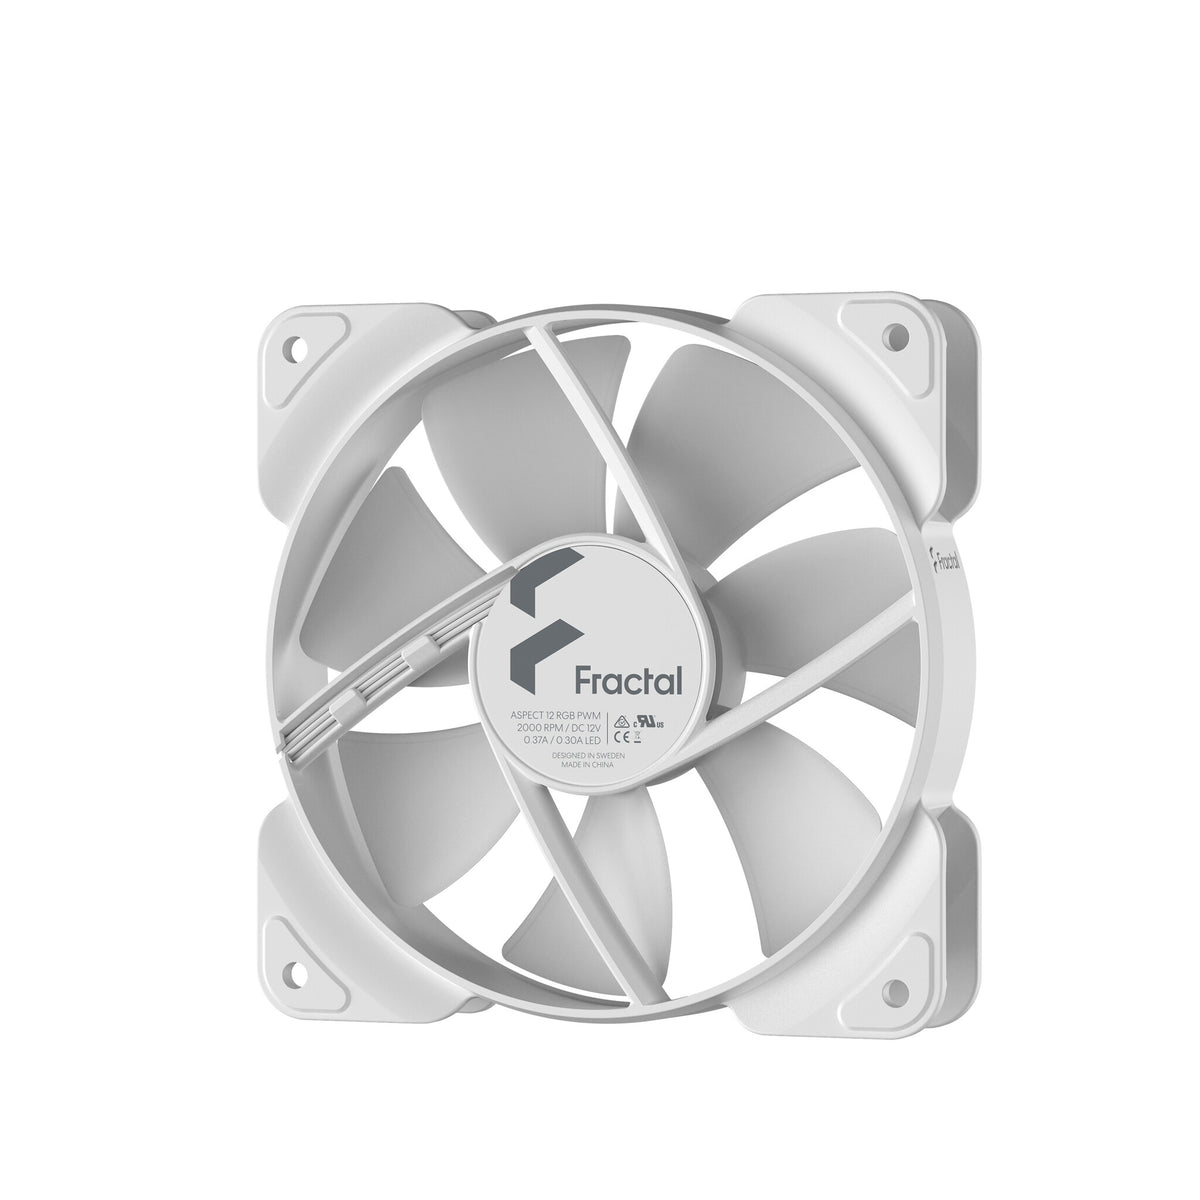 Fractal Design Aspect 12 RGB - PWM Computer Case Fan in White - 120mm